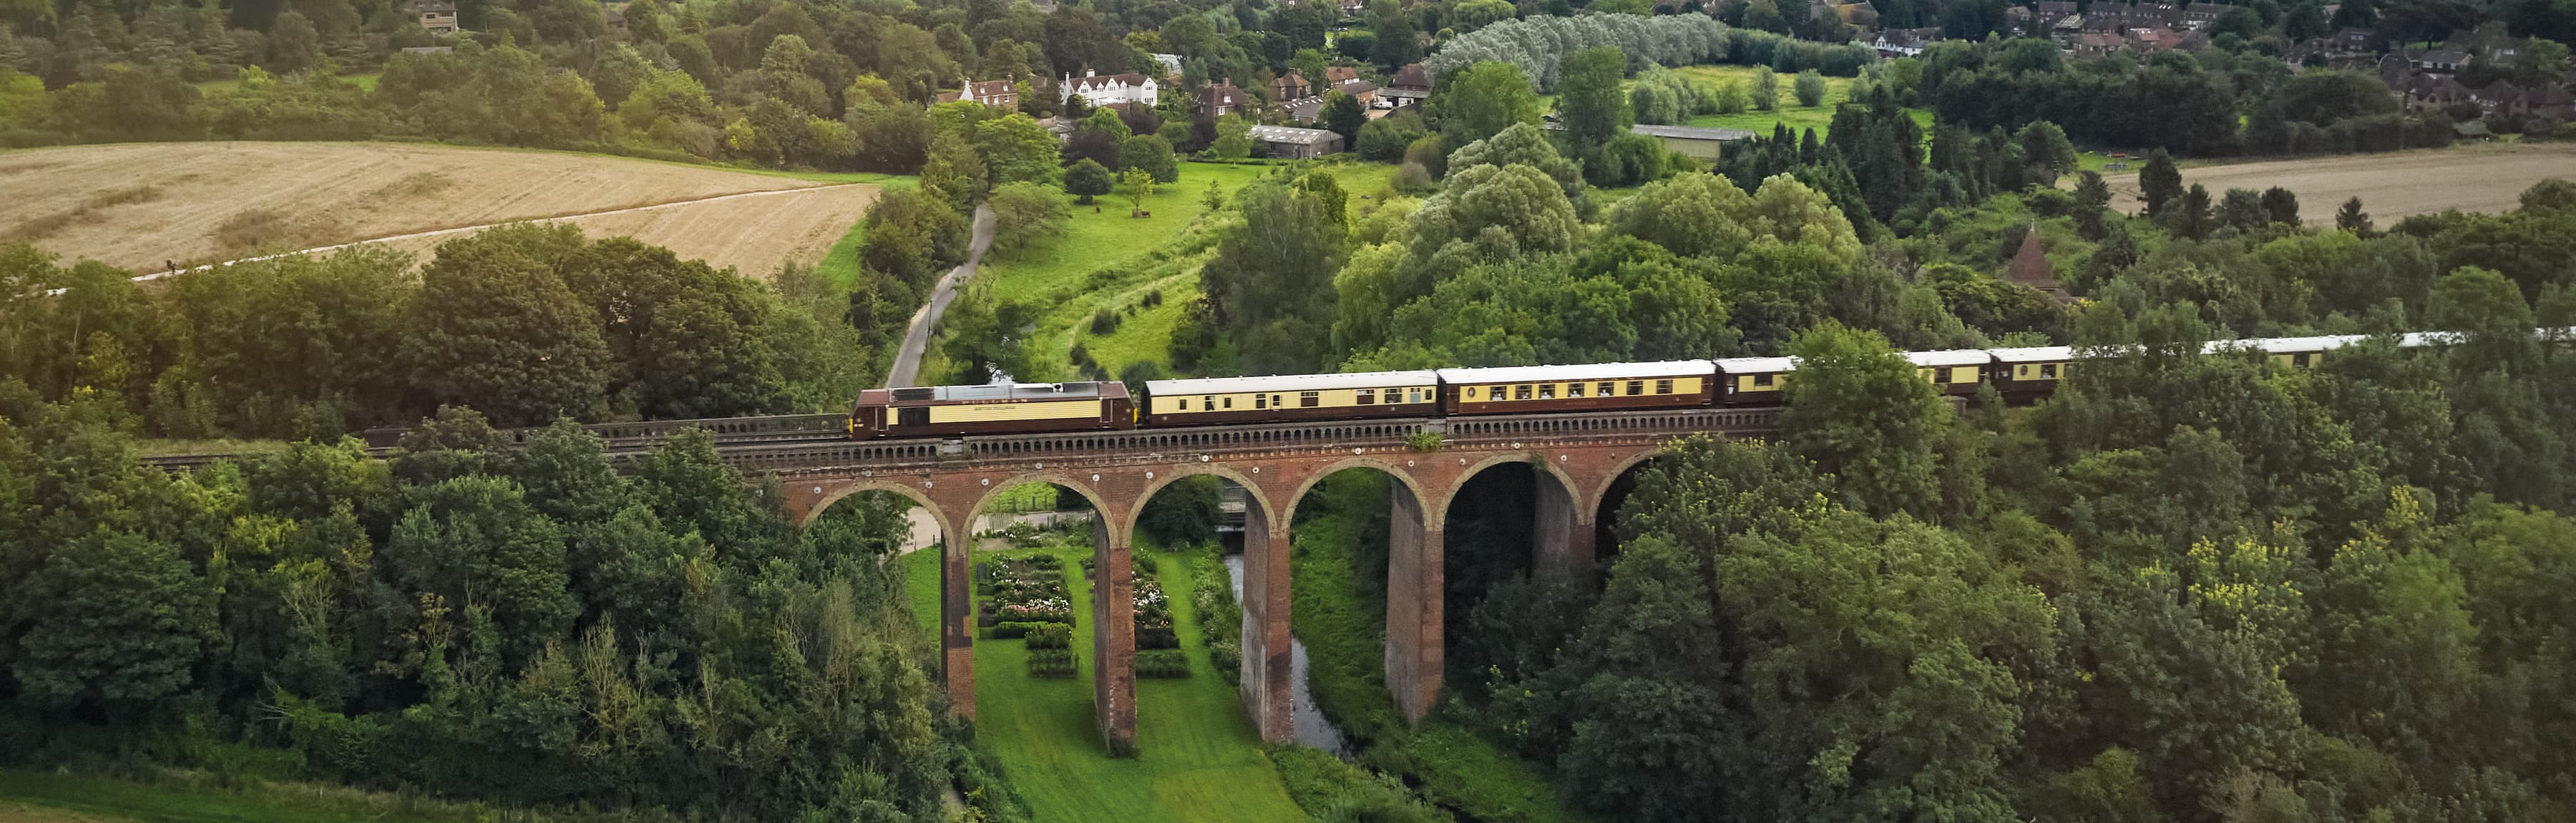 The Garden of England Luxury Train Day Trip